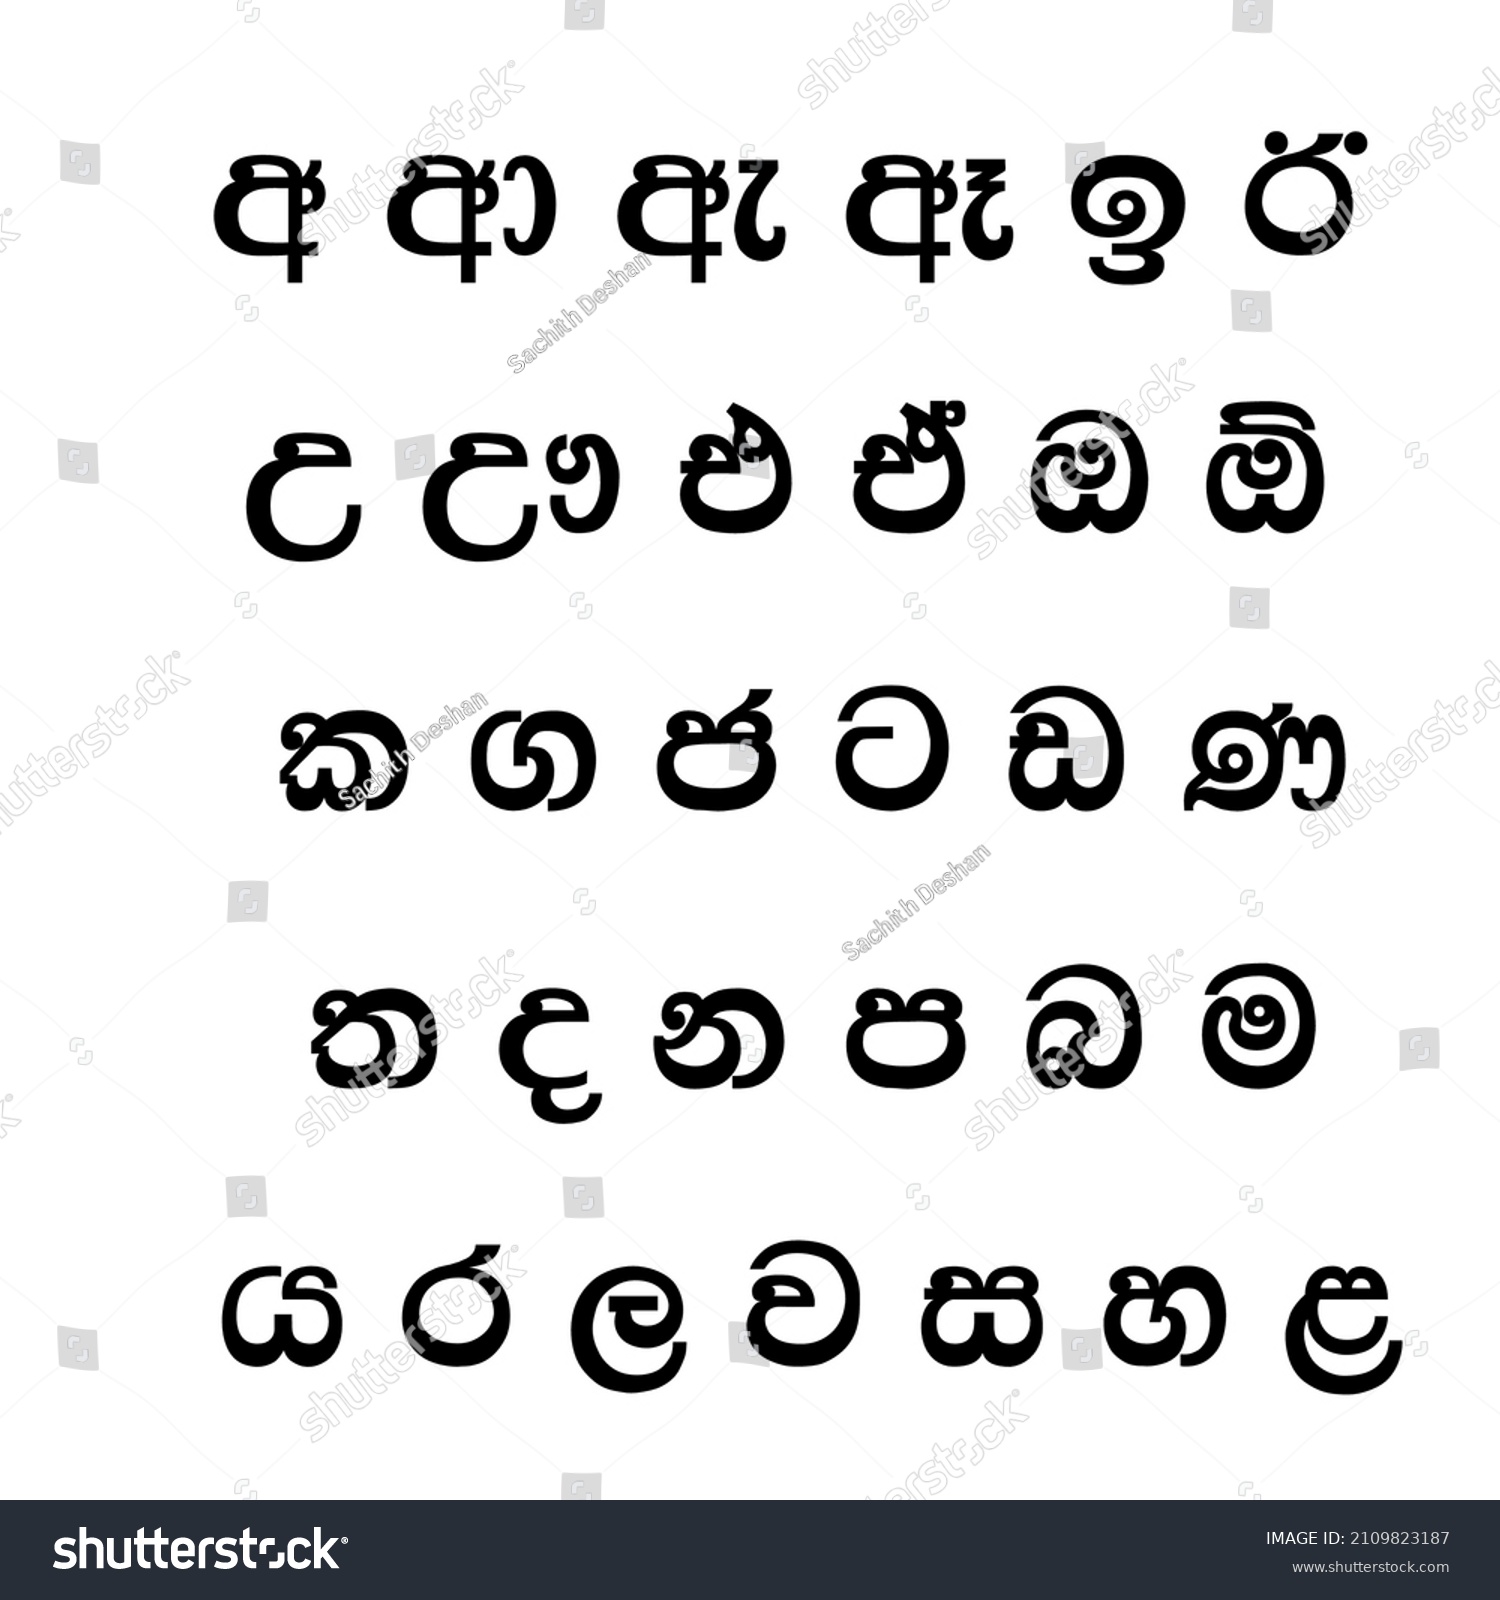 13 Sinhala fonts Images, Stock Photos & Vectors | Shutterstock